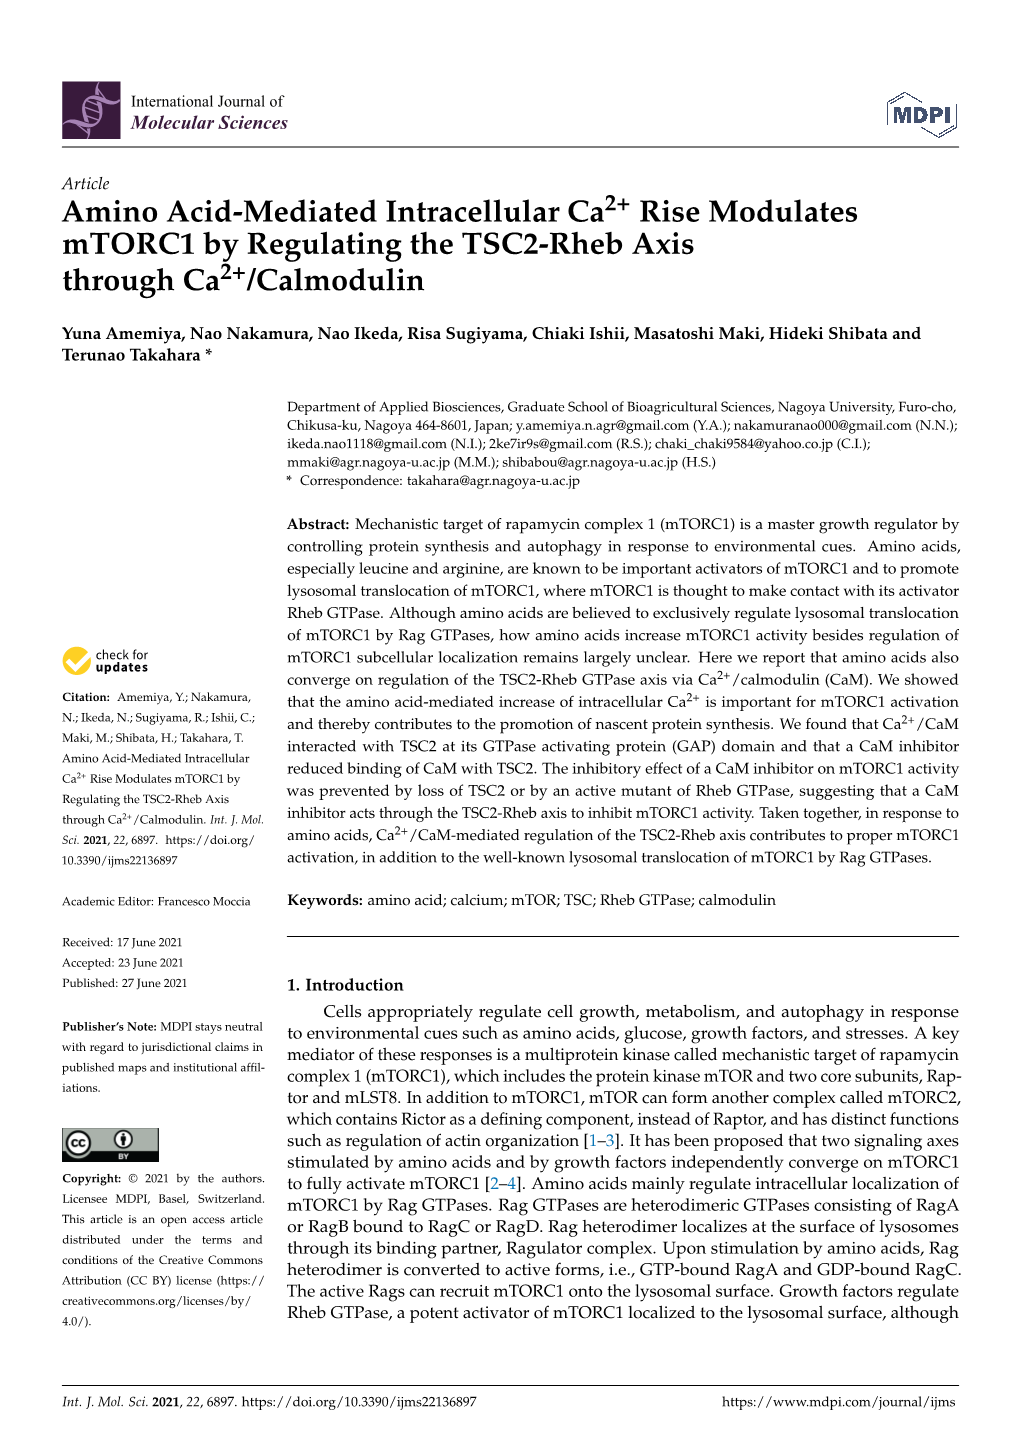 Amino Acid-Mediated Intracellular Ca2+ Rise Modulates Mtorc1 by Regulating the TSC2-Rheb Axis Through Ca2+/Calmodulin